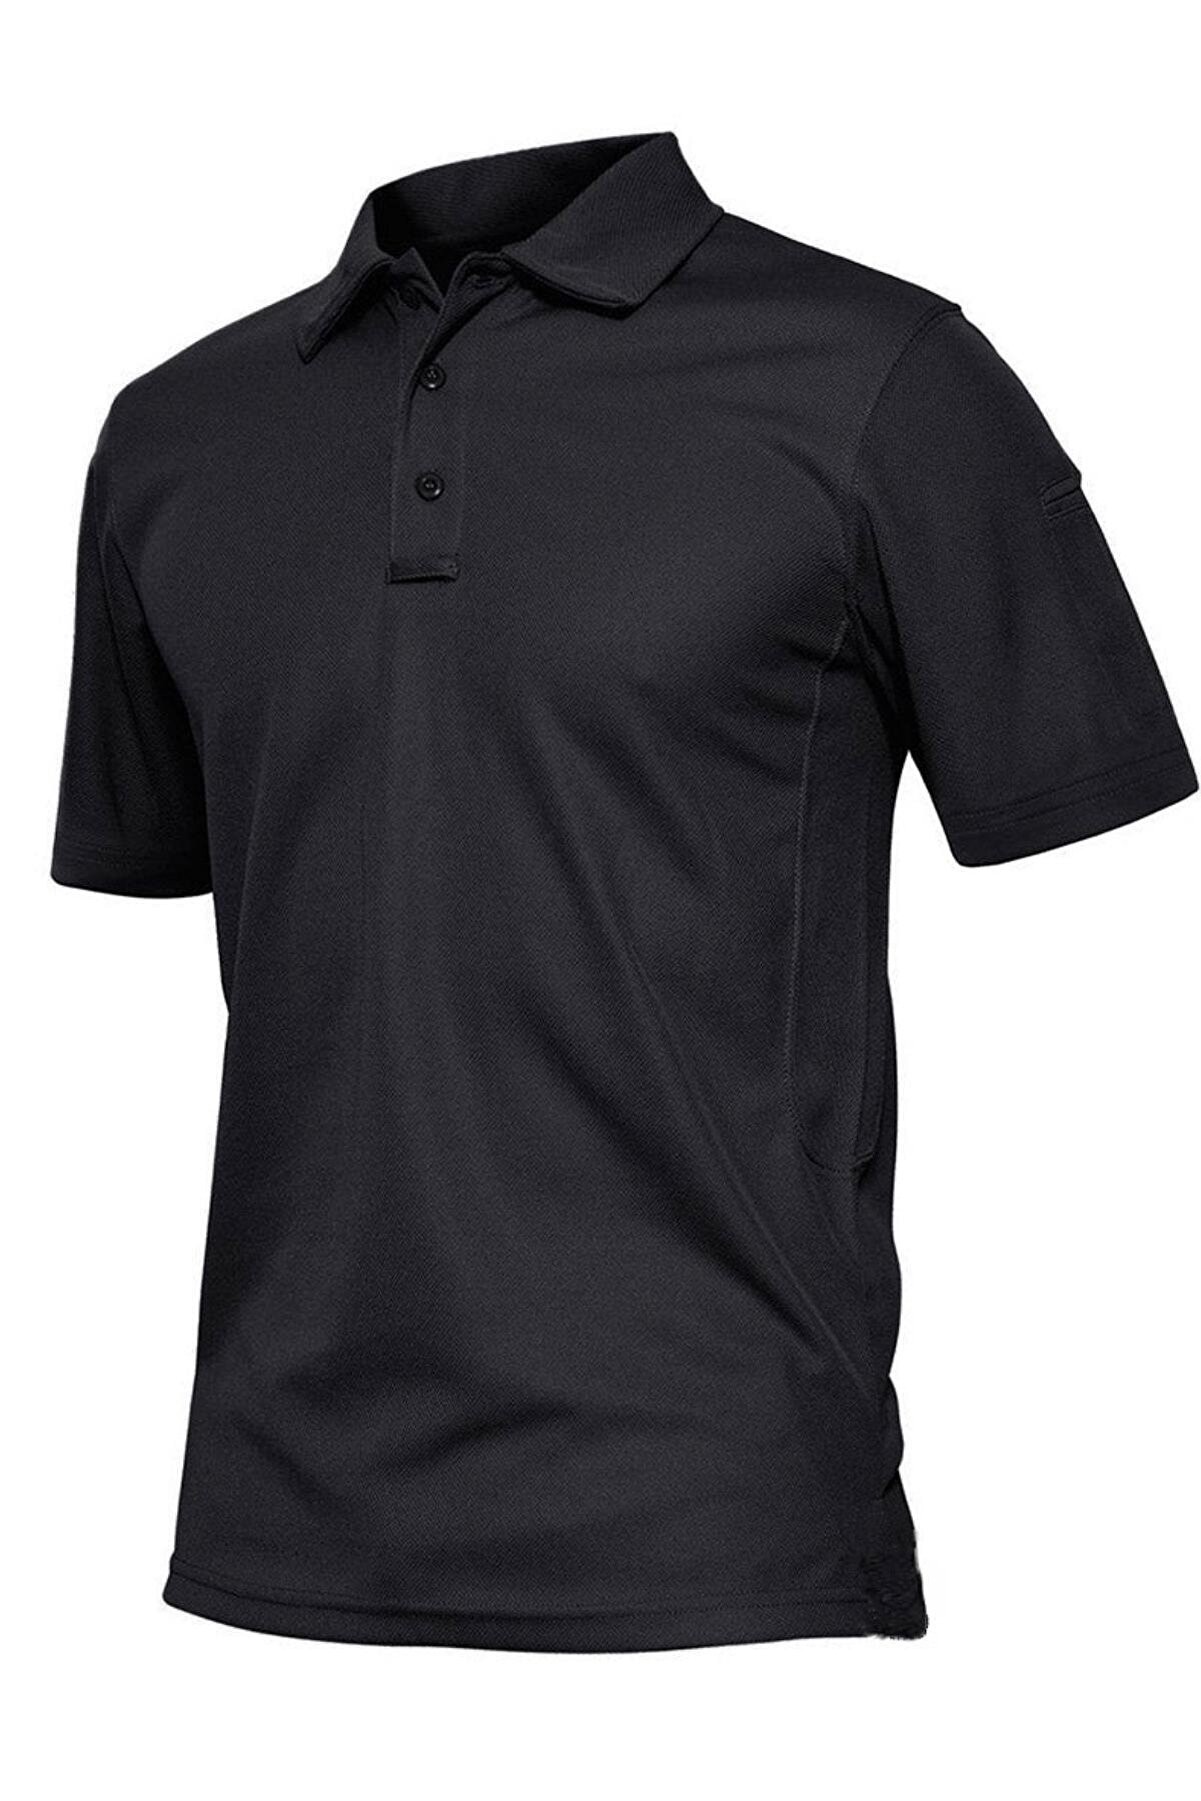 Ghassy Co. Erkek Taktik Polo Yaka Gömlek Hızlı Kuruma Nem Emici Performans Pique Jersey Golf T-shirt - Siyah